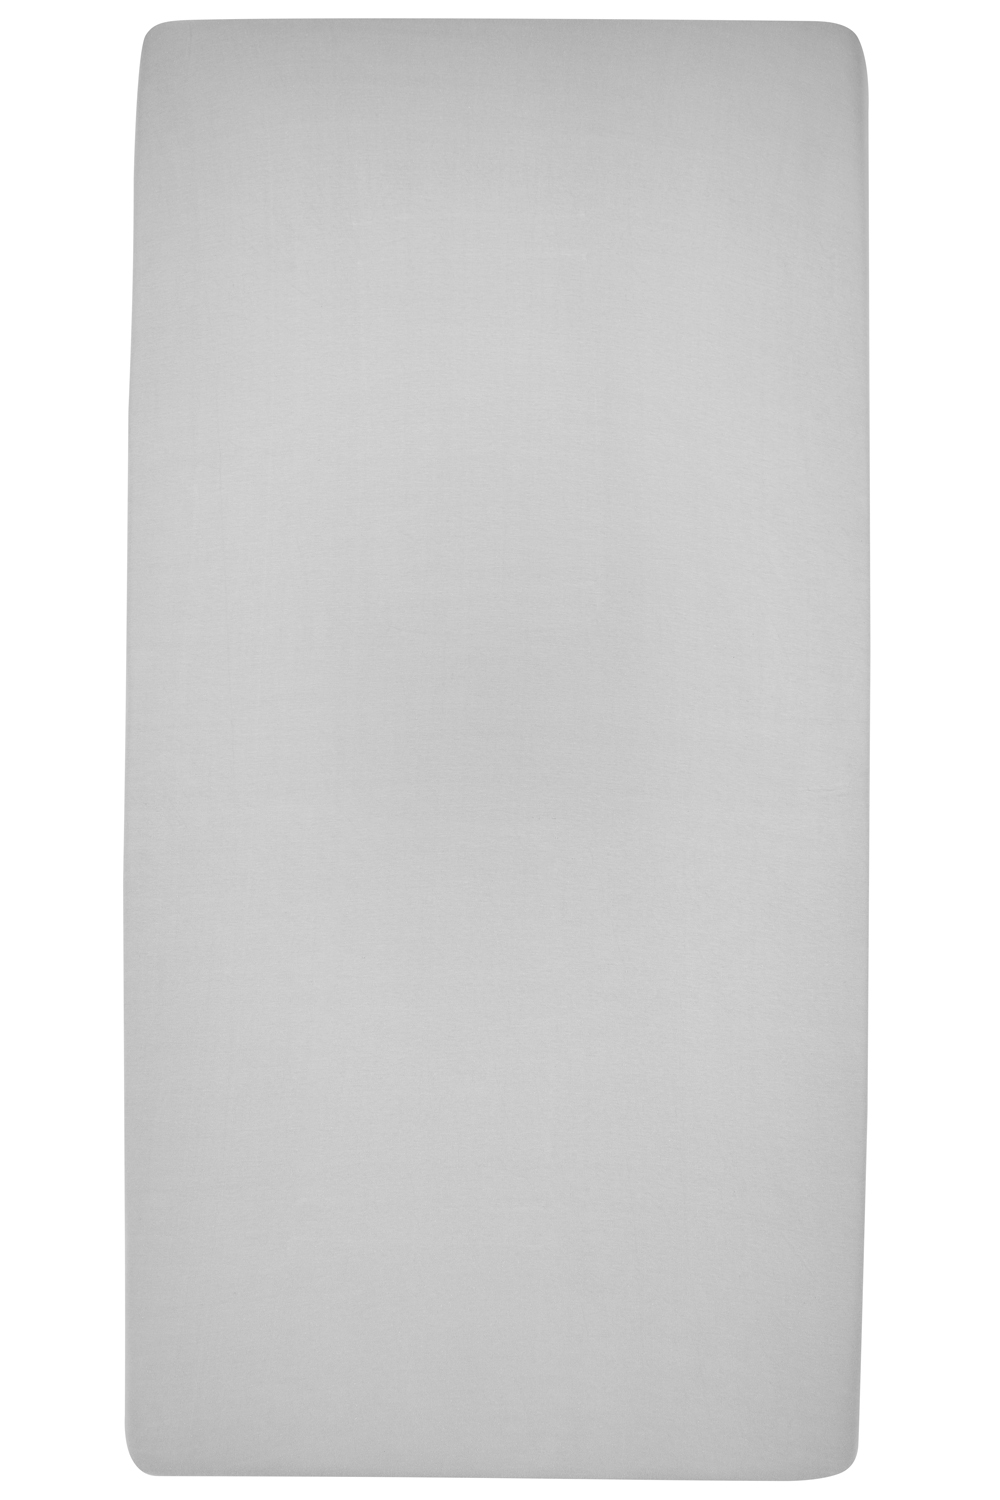 Jersey Hoeslaken - Lichtgrijs - 70x140/150cm